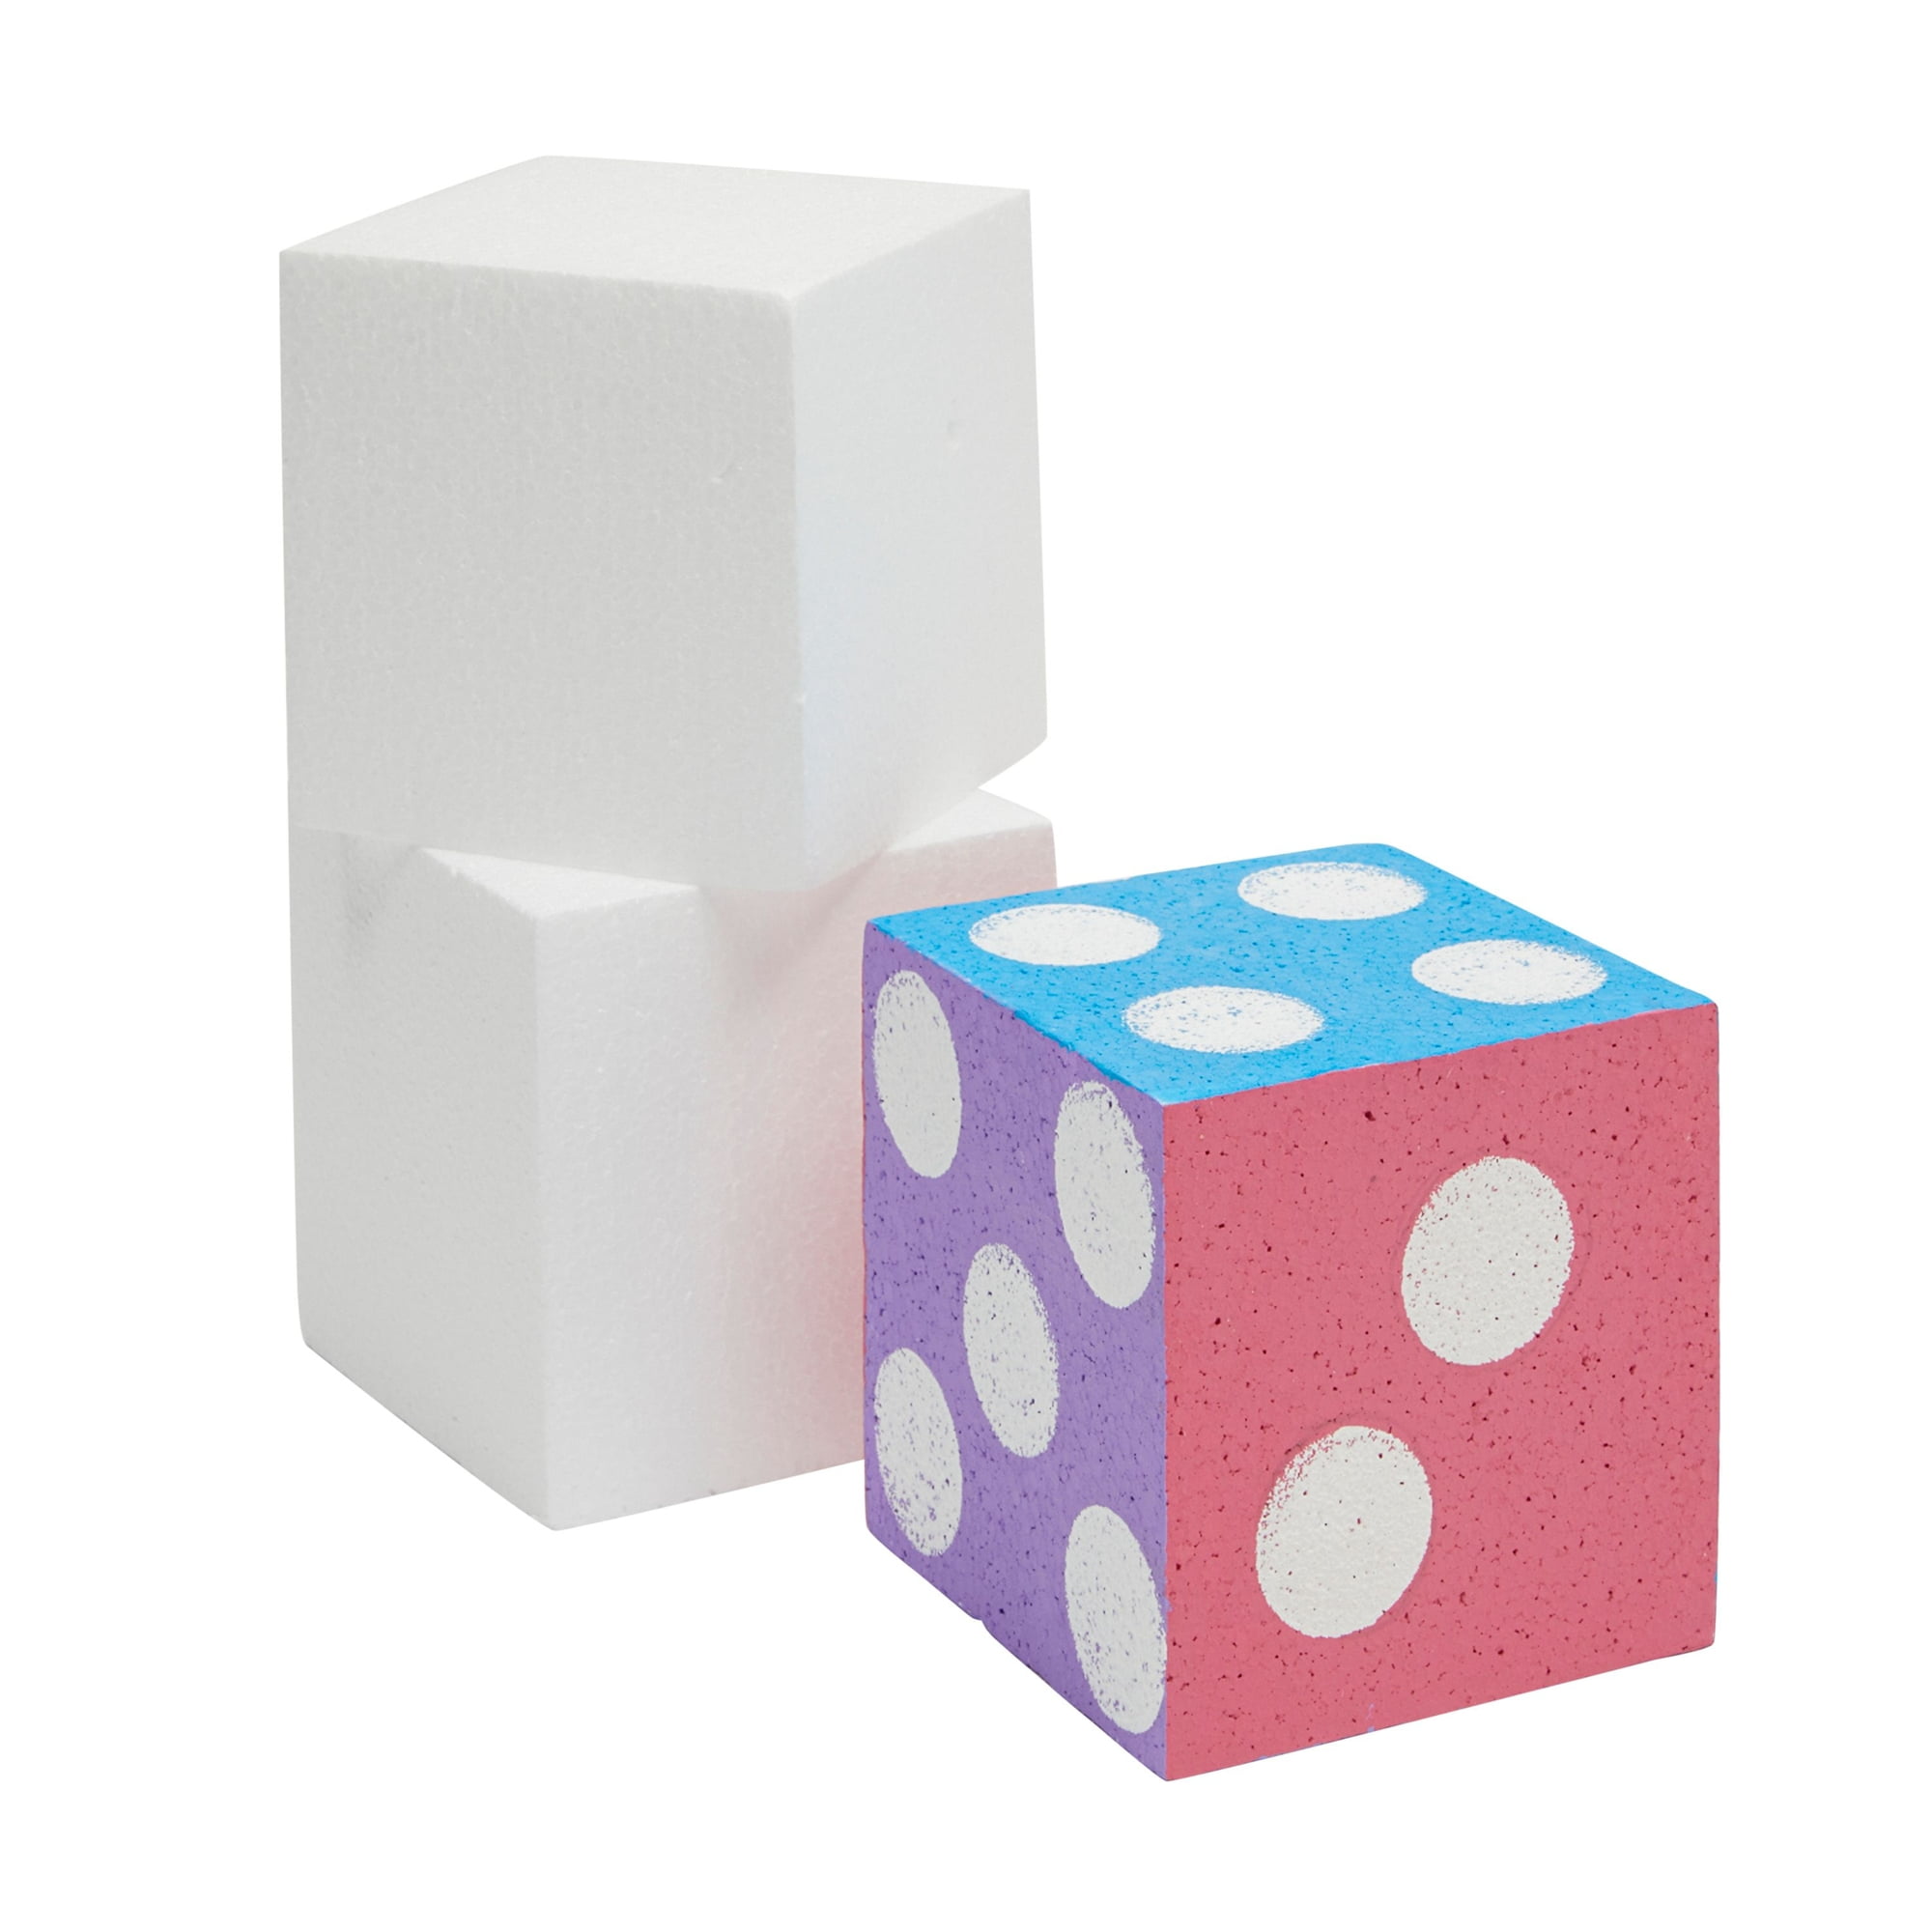 10pcs Lightweight Foam Cube DIY Craft Foam Blocks EVA Rubber Block Square  Foam Base Model Making Material School Project Supply - AliExpress